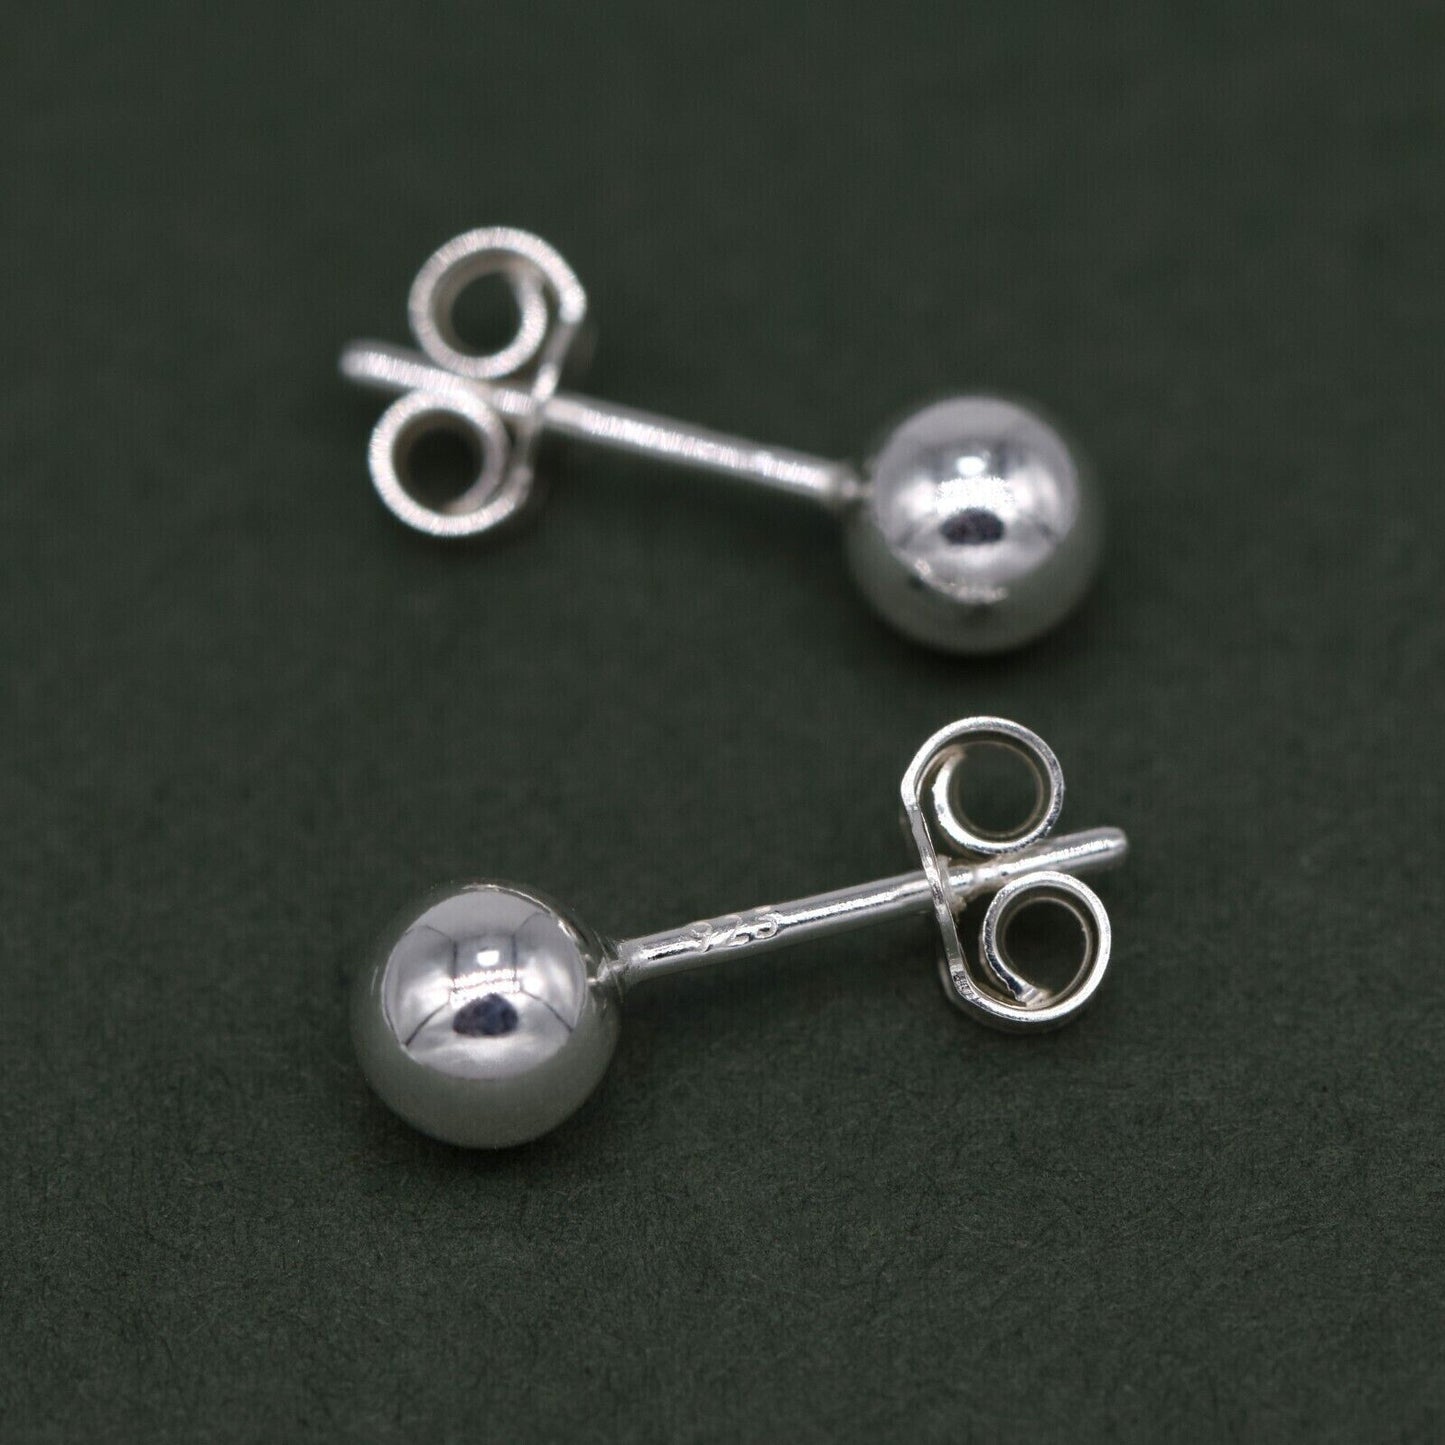 Genuine 925 Sterling Silver 5mm Plain Polished Ball Studs/Earrings